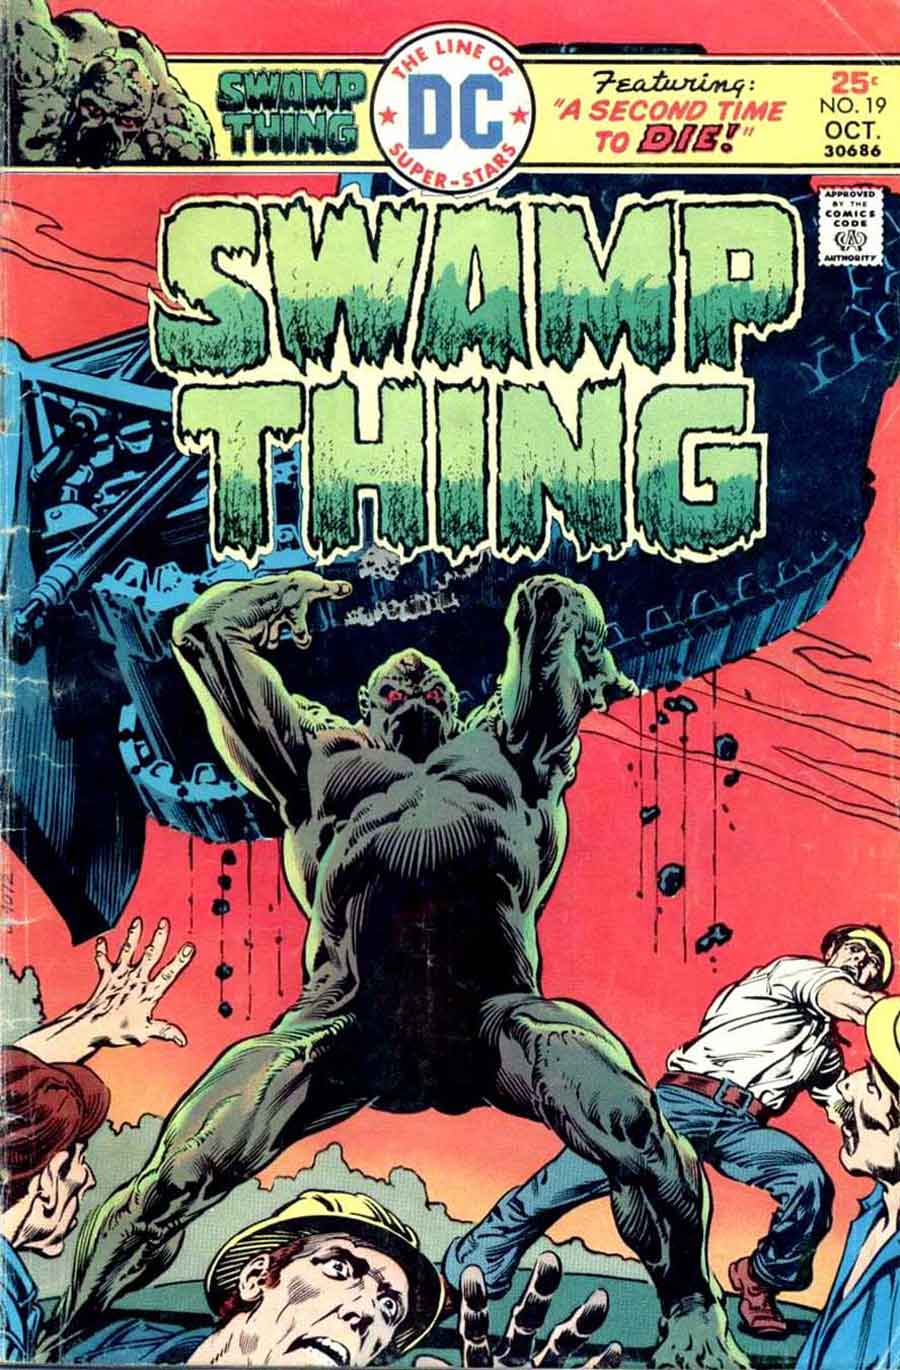 Swamp Thing v1 #19 1970s bronze age dc comic book cover art by Nestor Redondo